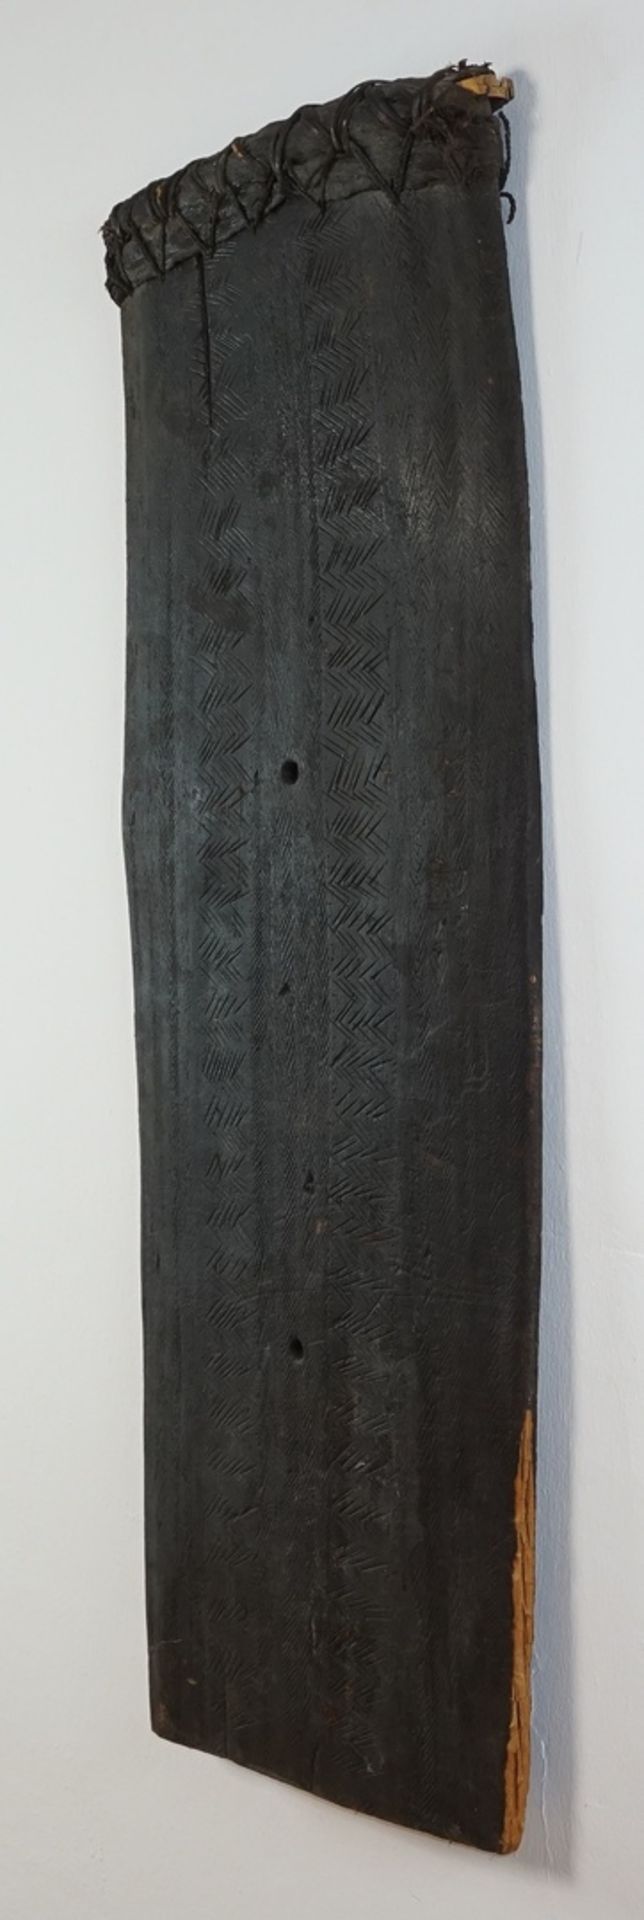 Kampfschild, Papua-Neuguinea, 1. Hälfte 20. Jh.Holz, starke Krustenpatina, Rand mit Blättern - Bild 2 aus 4